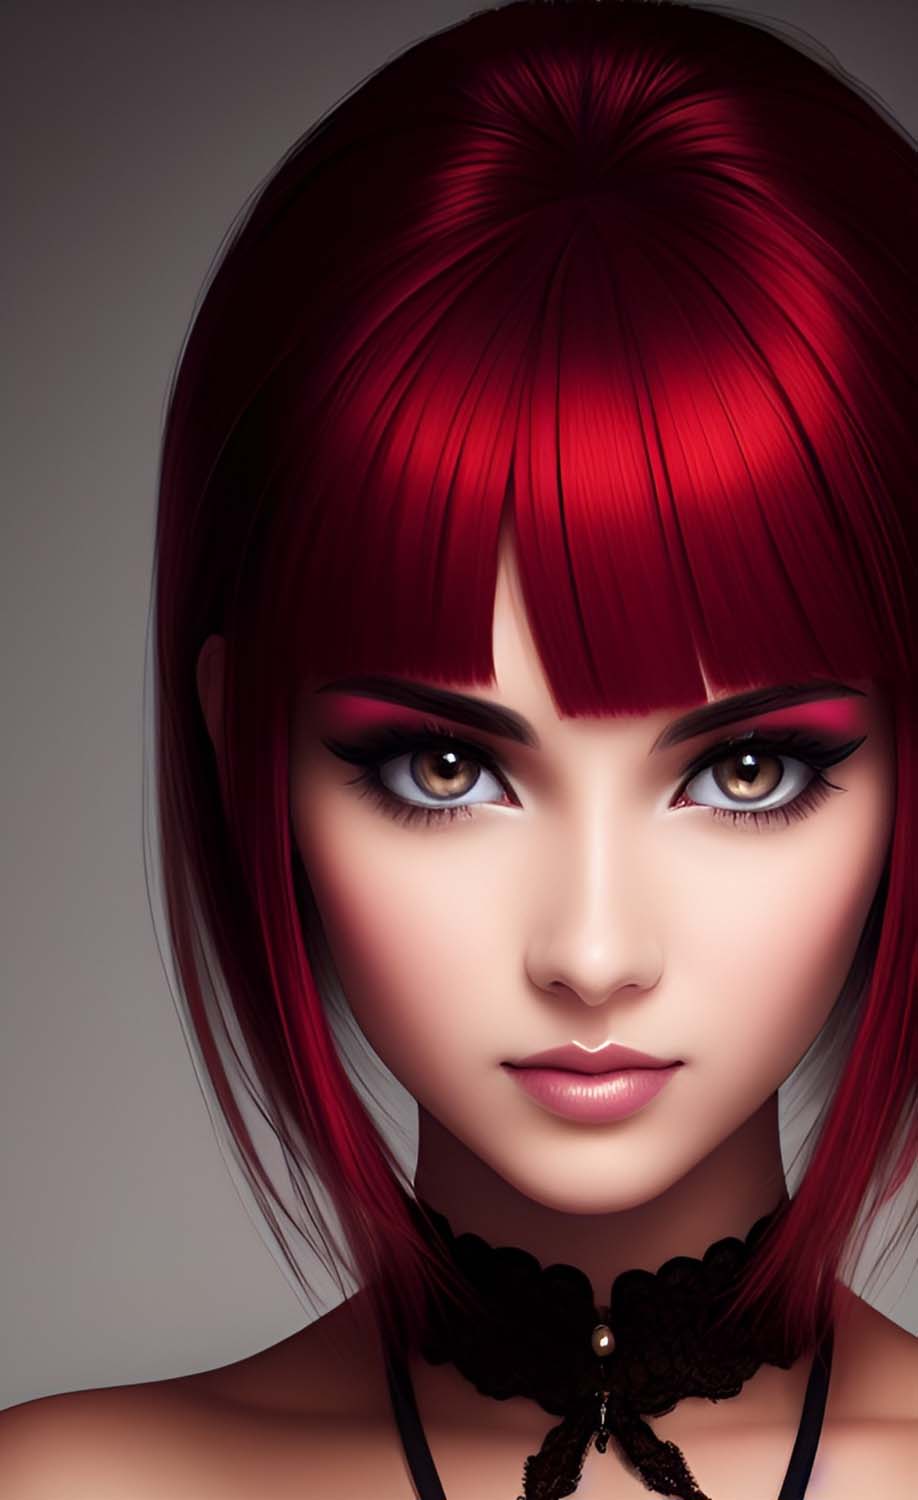 Redhead Girl Portrait iPhone Wallpaper HD